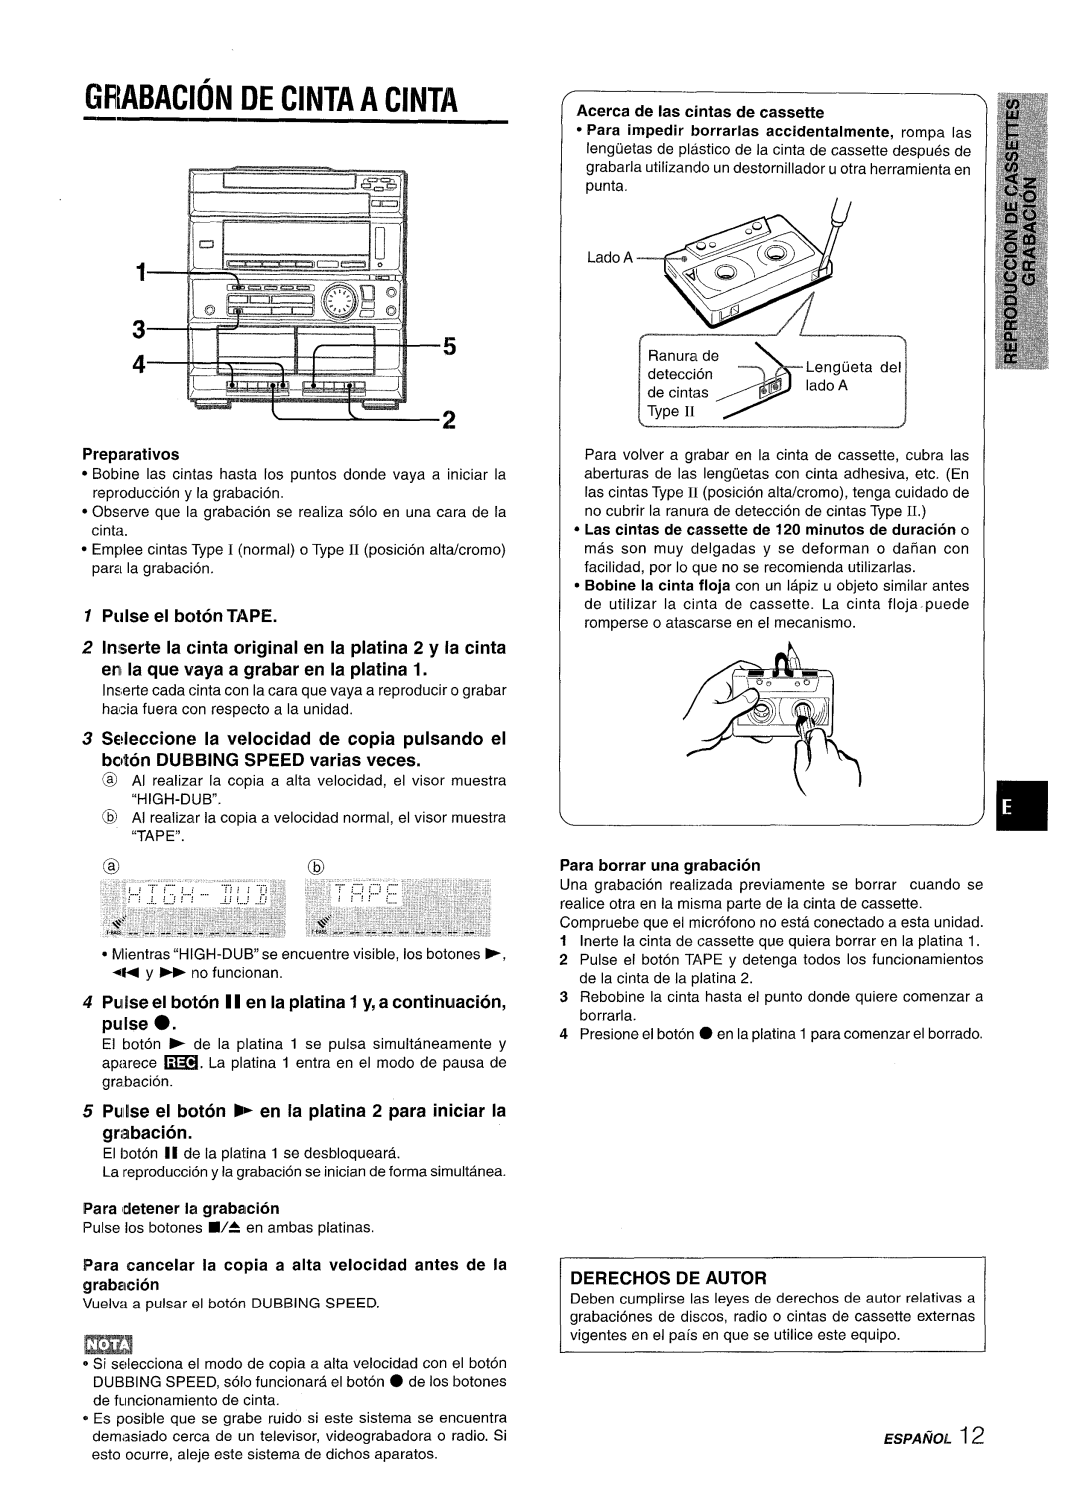 Sony CX-ZR525 manual GRABAC1ON DE CINTA A CINTA, Acerca de Ias cintas de cassette, Preparatives, Pulse el boton TAPE 